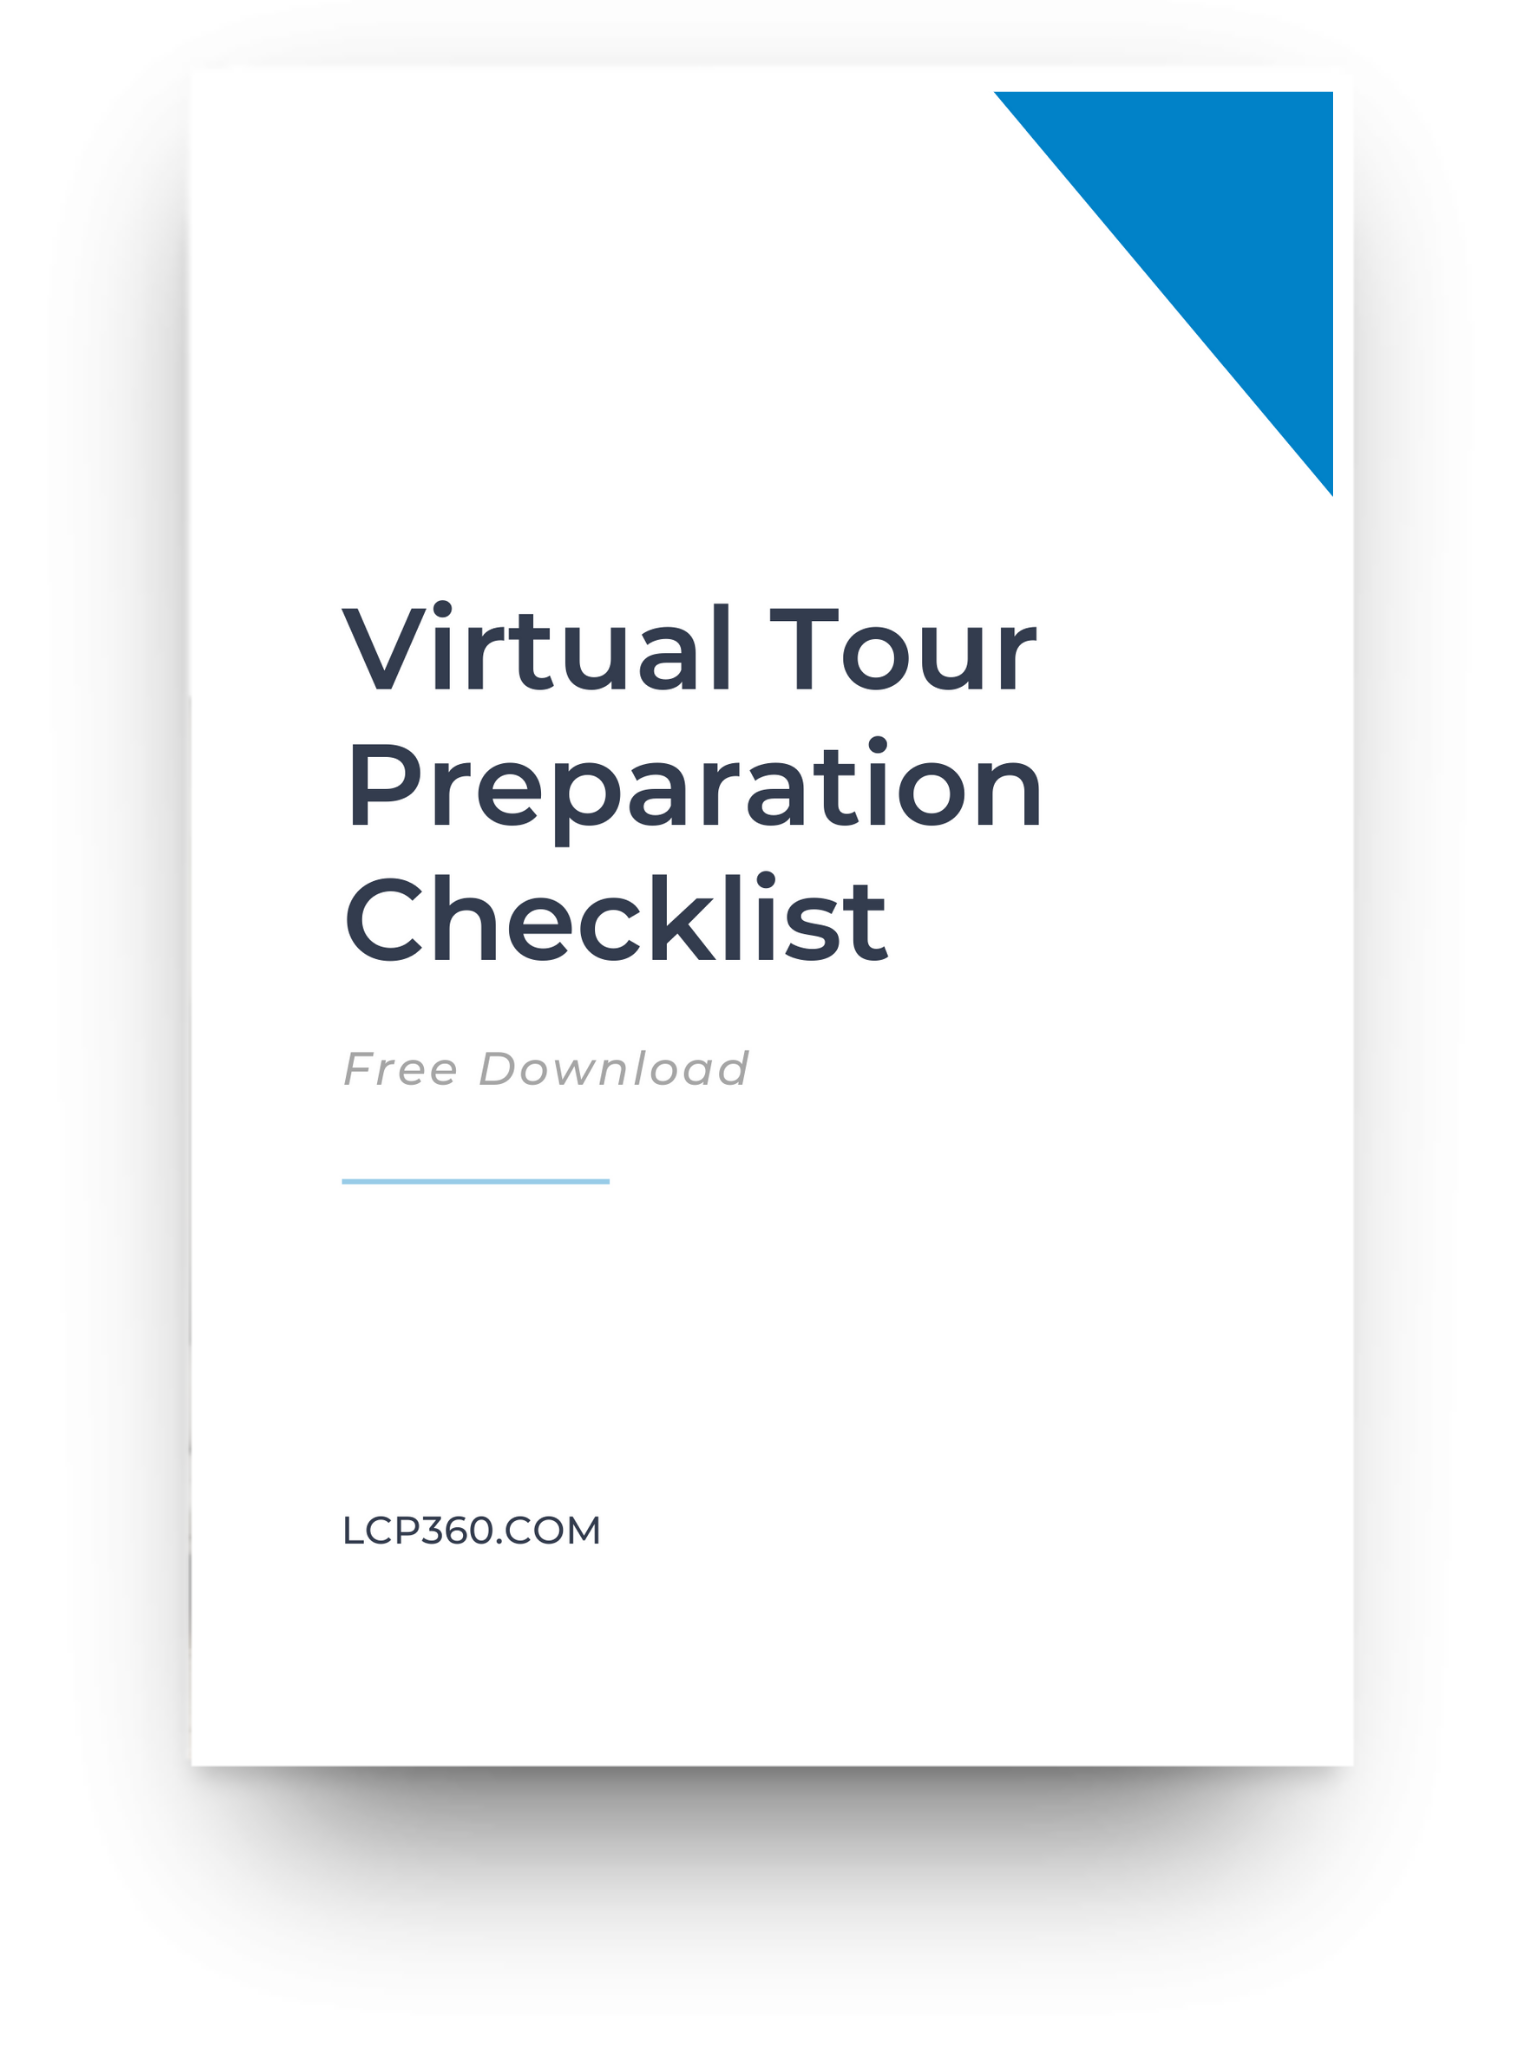 Virtual Tour Preparation Checklist Mockup